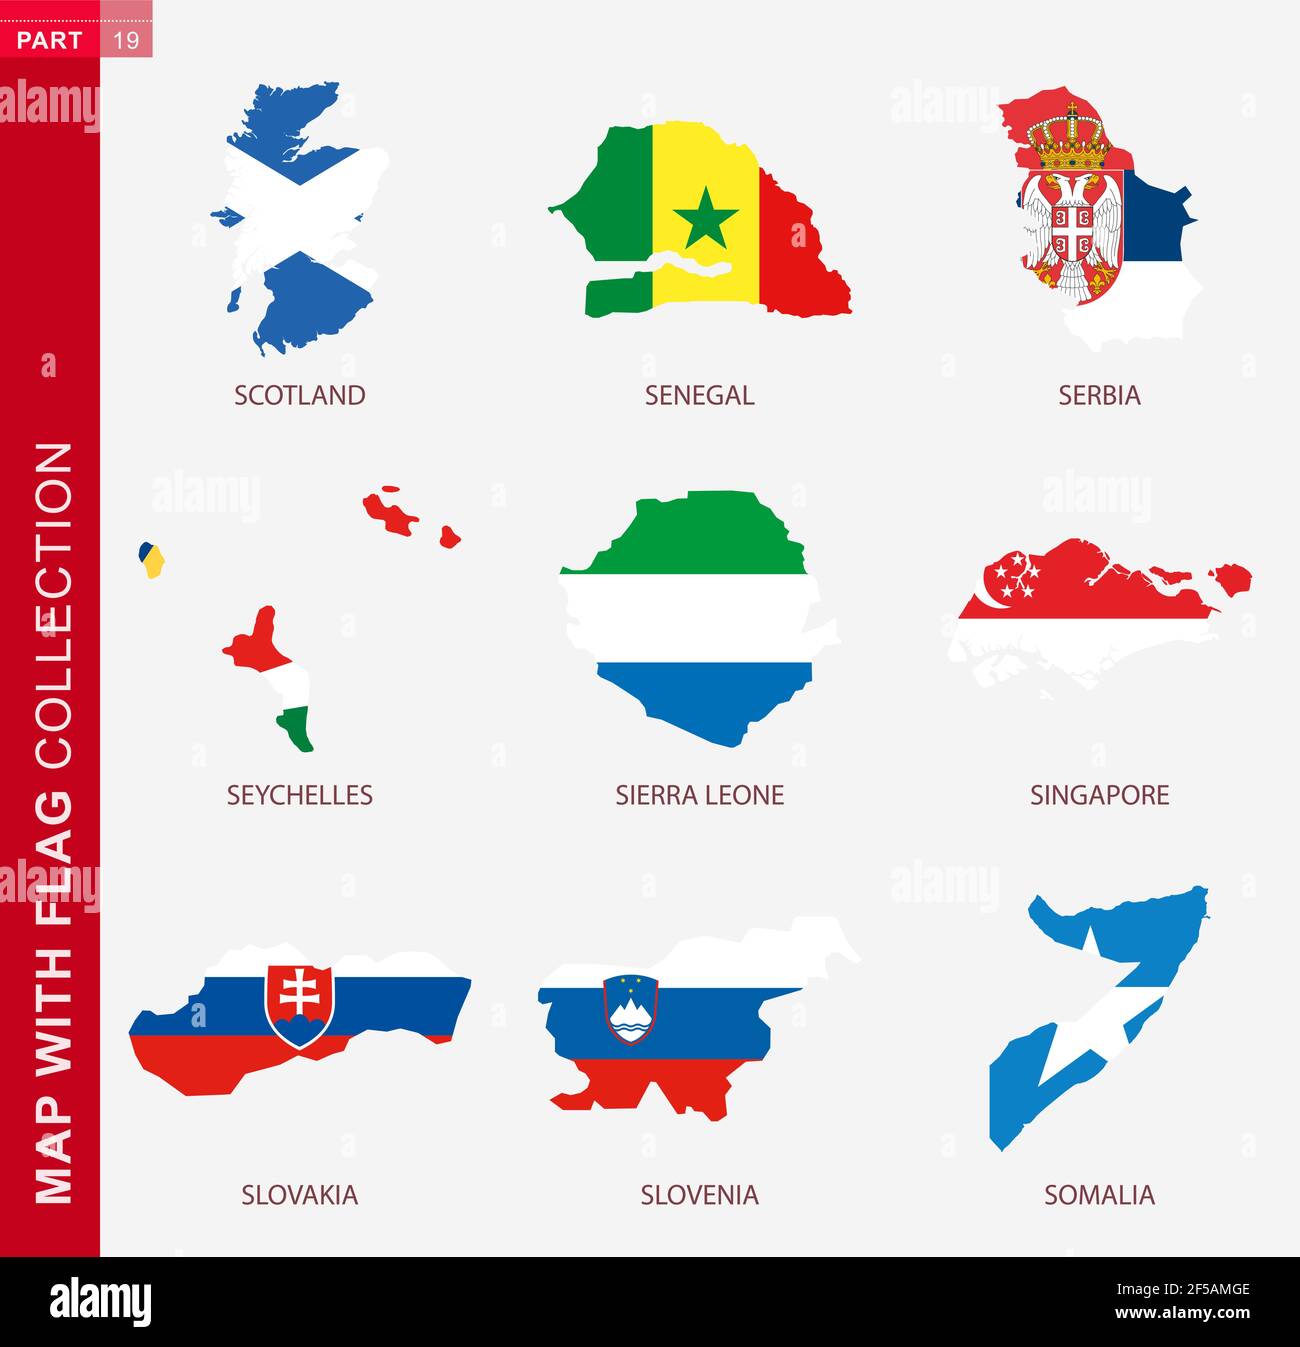 Map with flag collection, nine map contour with flag of Scotland, Senegal, Serbia, Seychelles, Sierra Leone, Singapore, Slovakia, Slovenia, Somalia Stock Vector